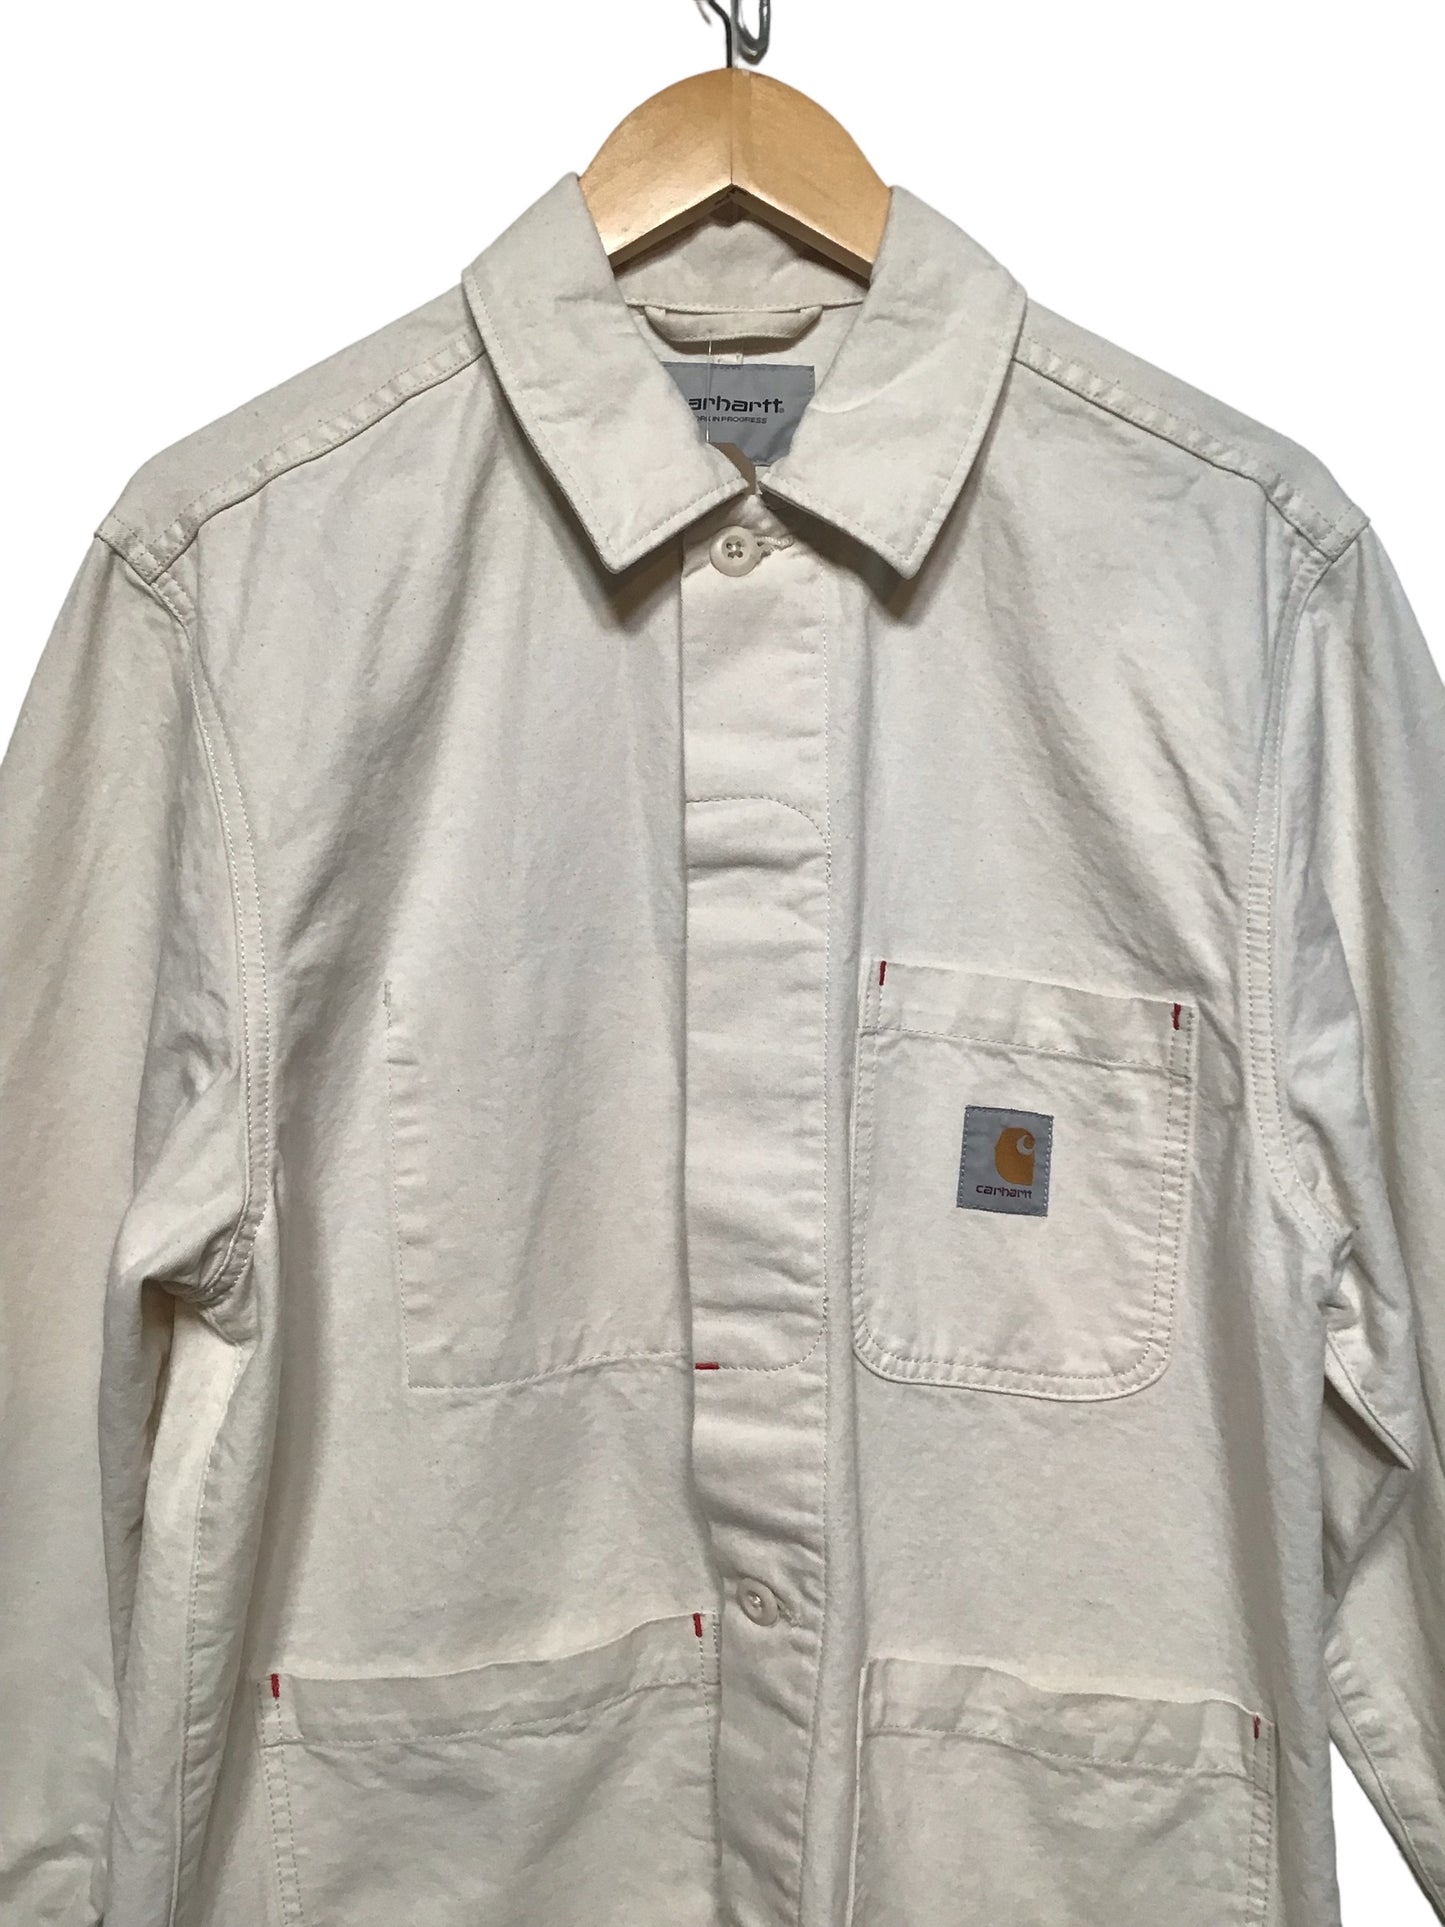 Carhartt Off White Cotton Jacket (Size M)